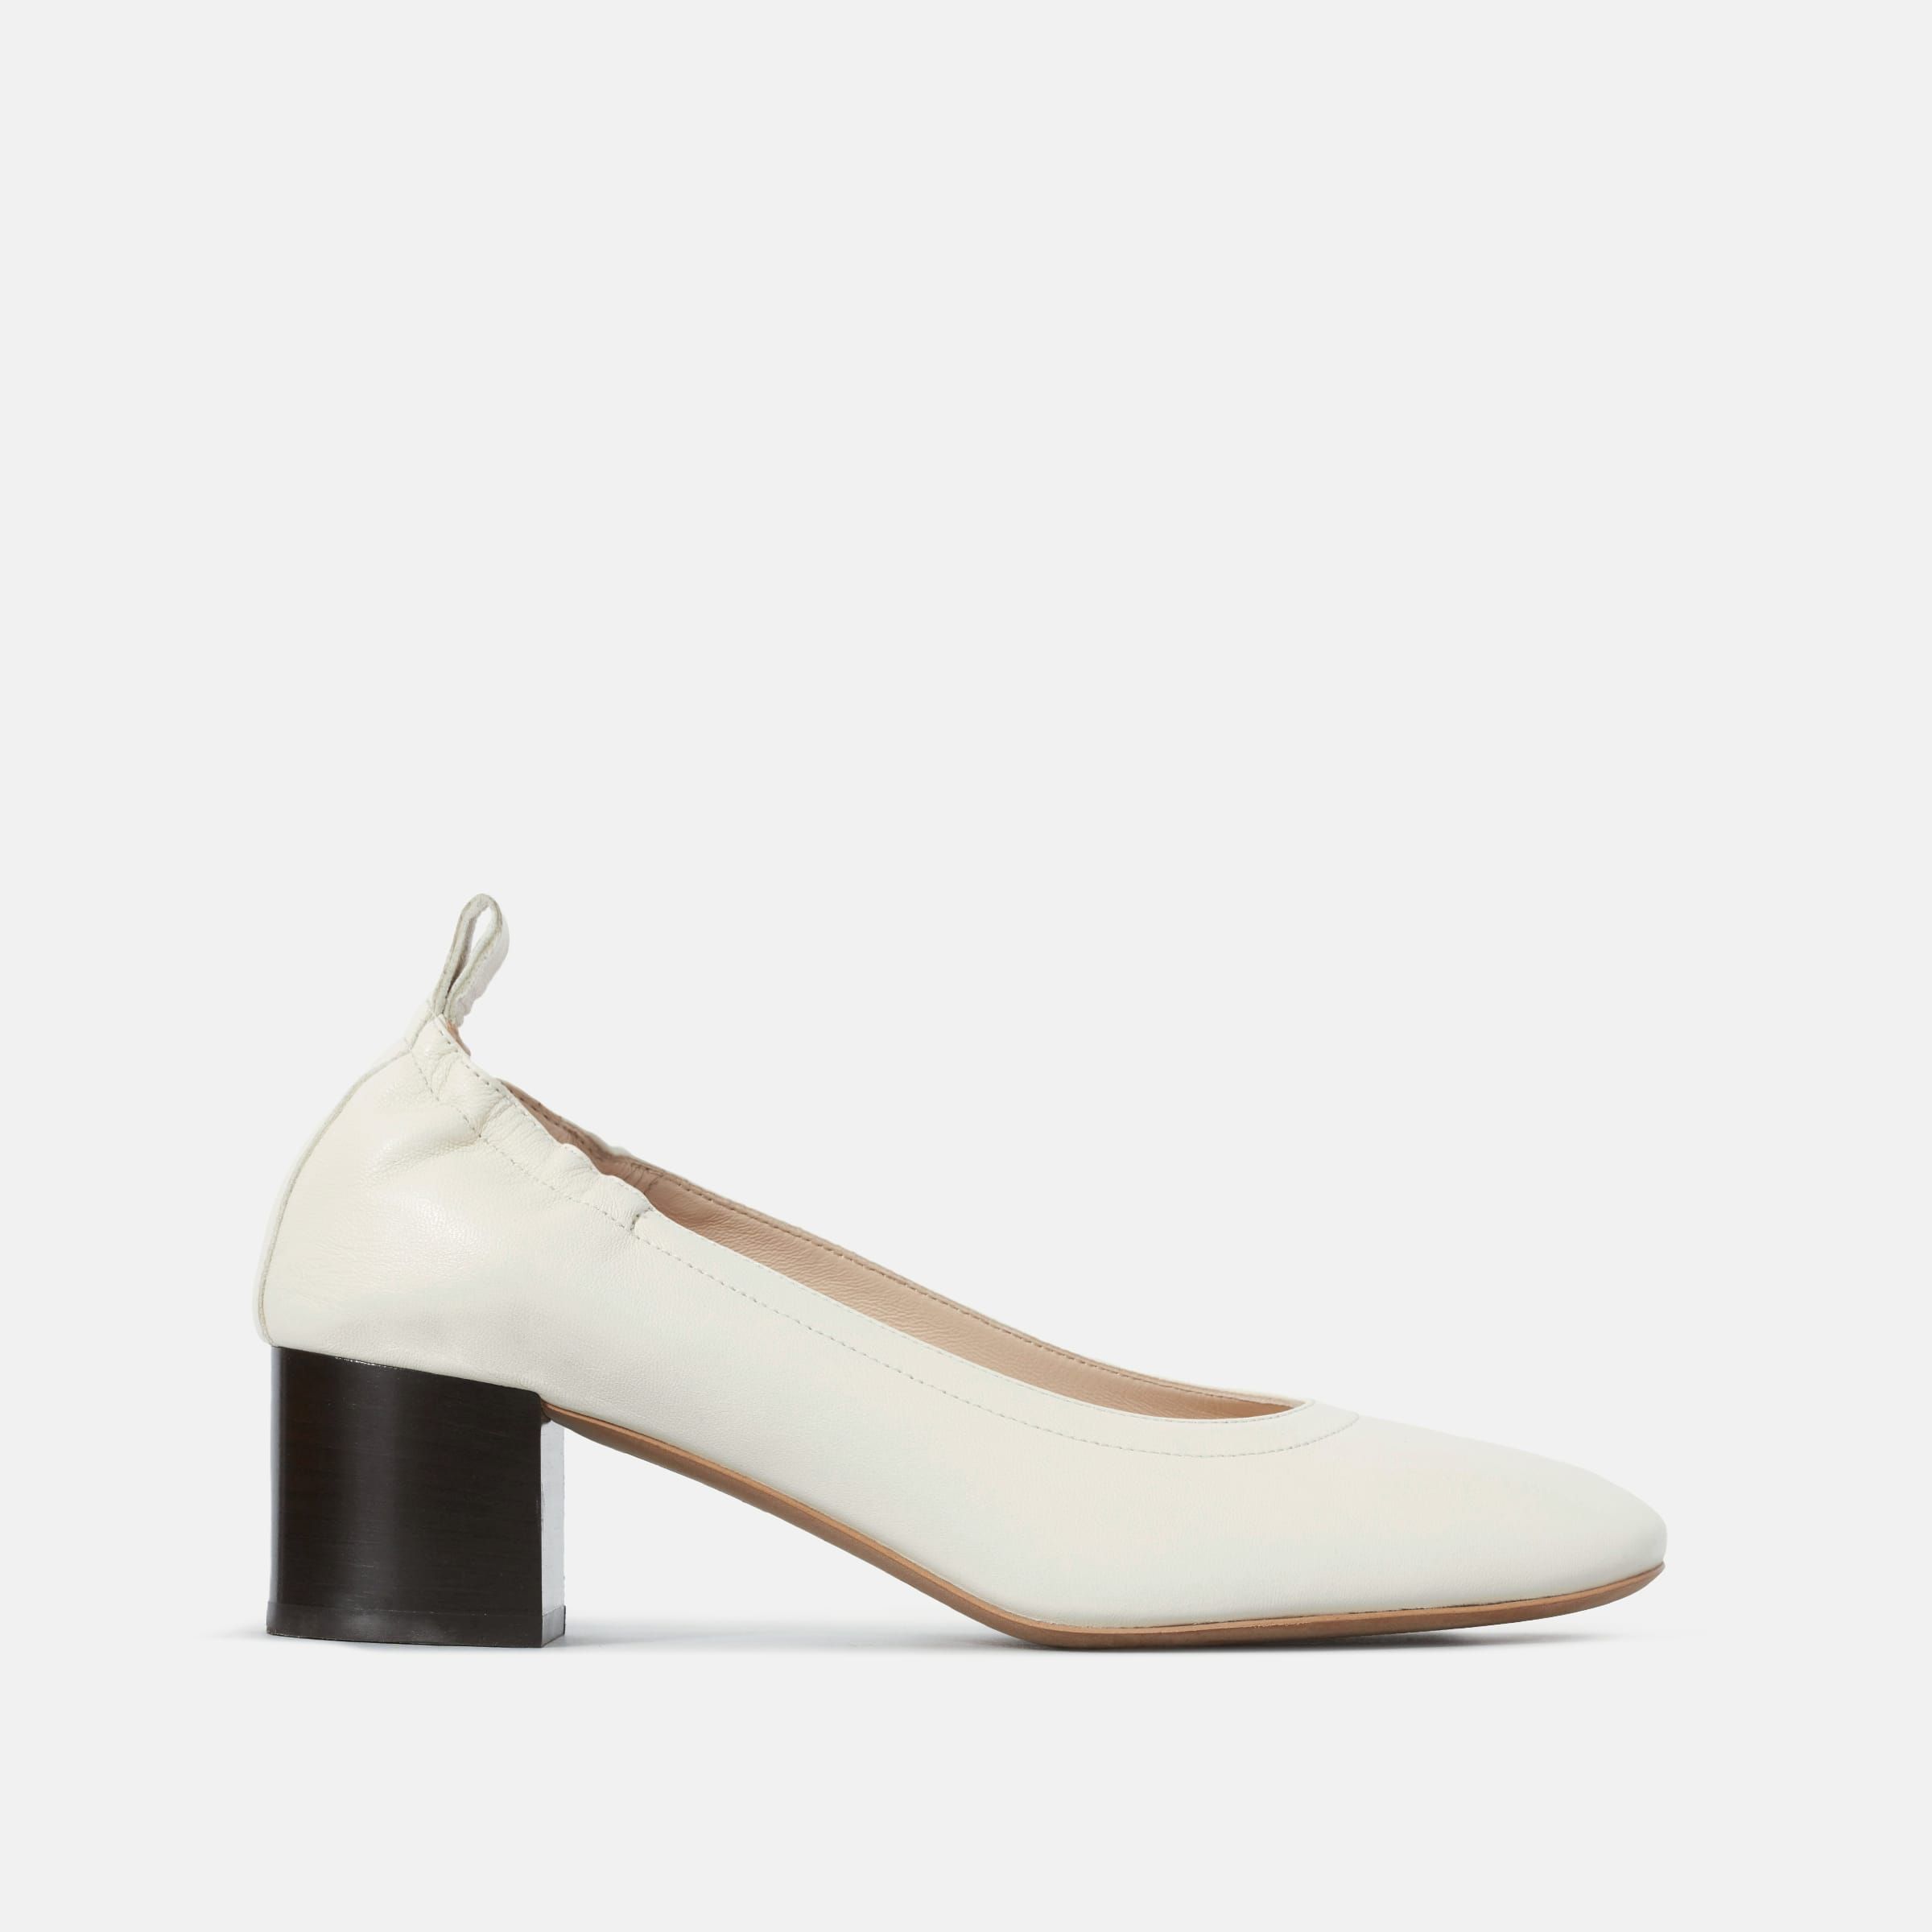 Savera (Heel) | Comfy block heels, Heels, Faux leather